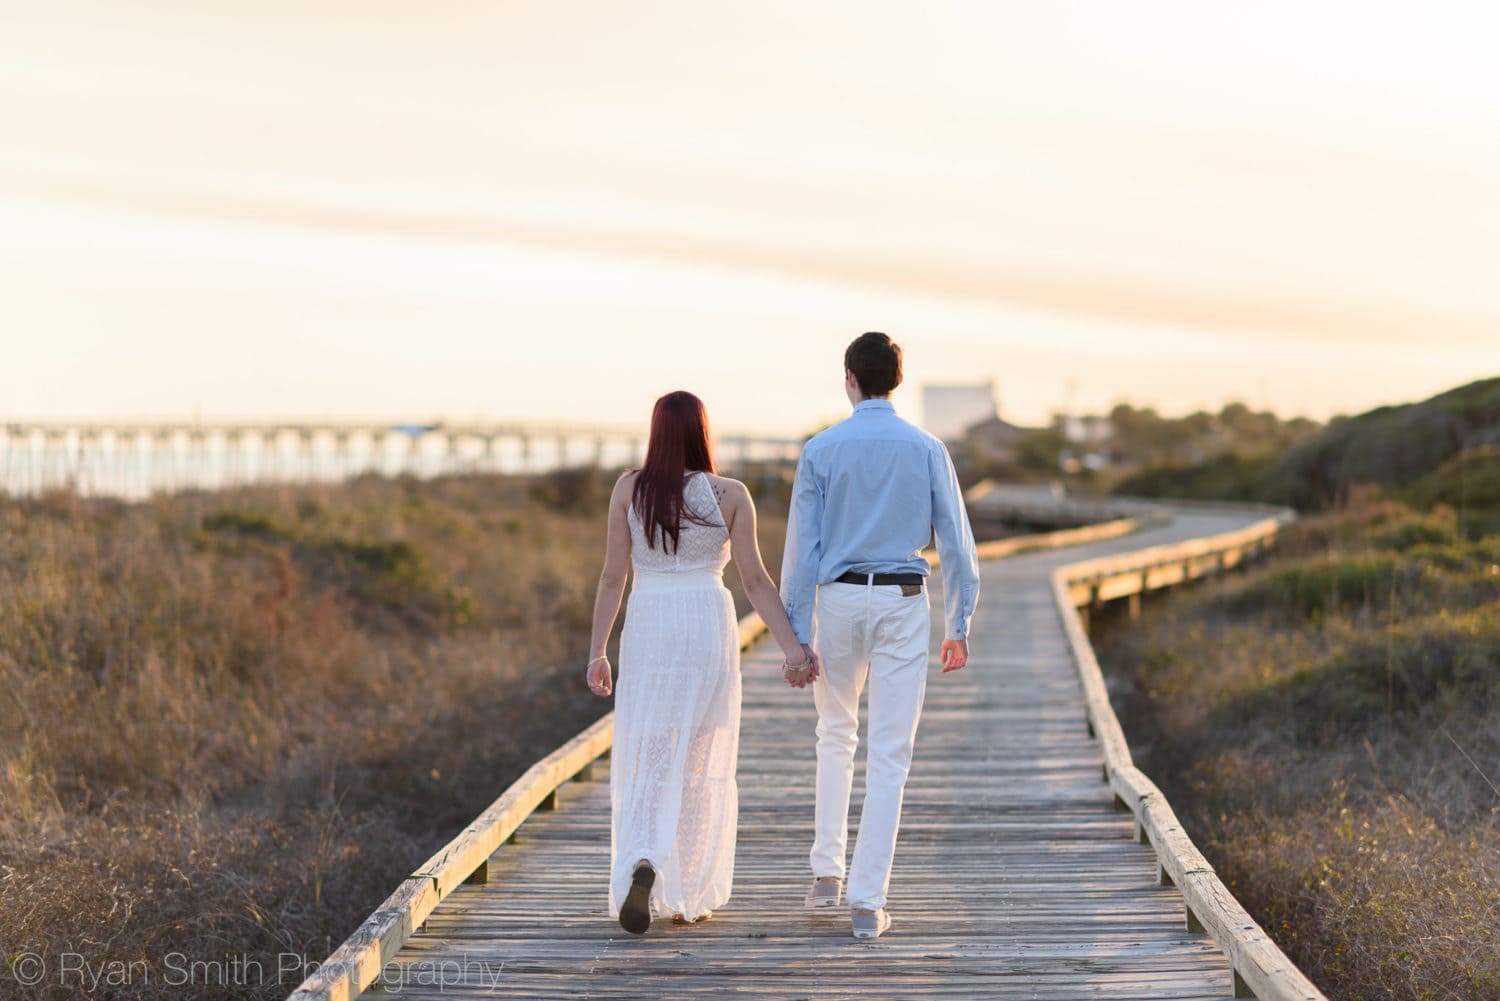 Holding hands walking down the boardwalk together - Myrtle Beach State Park